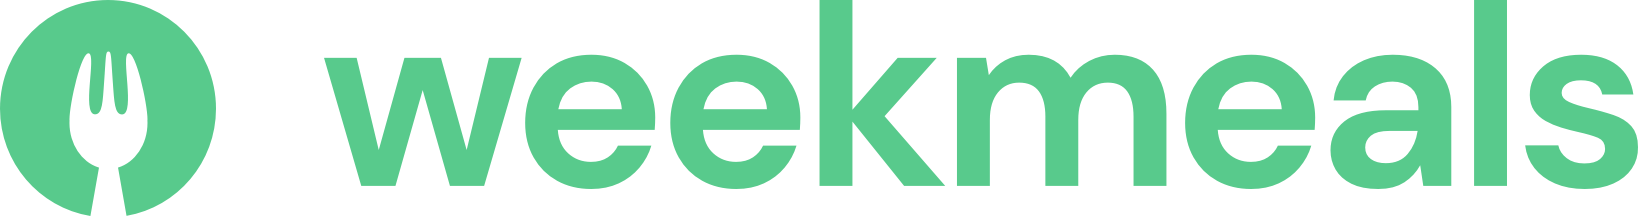 weekmeals-logo